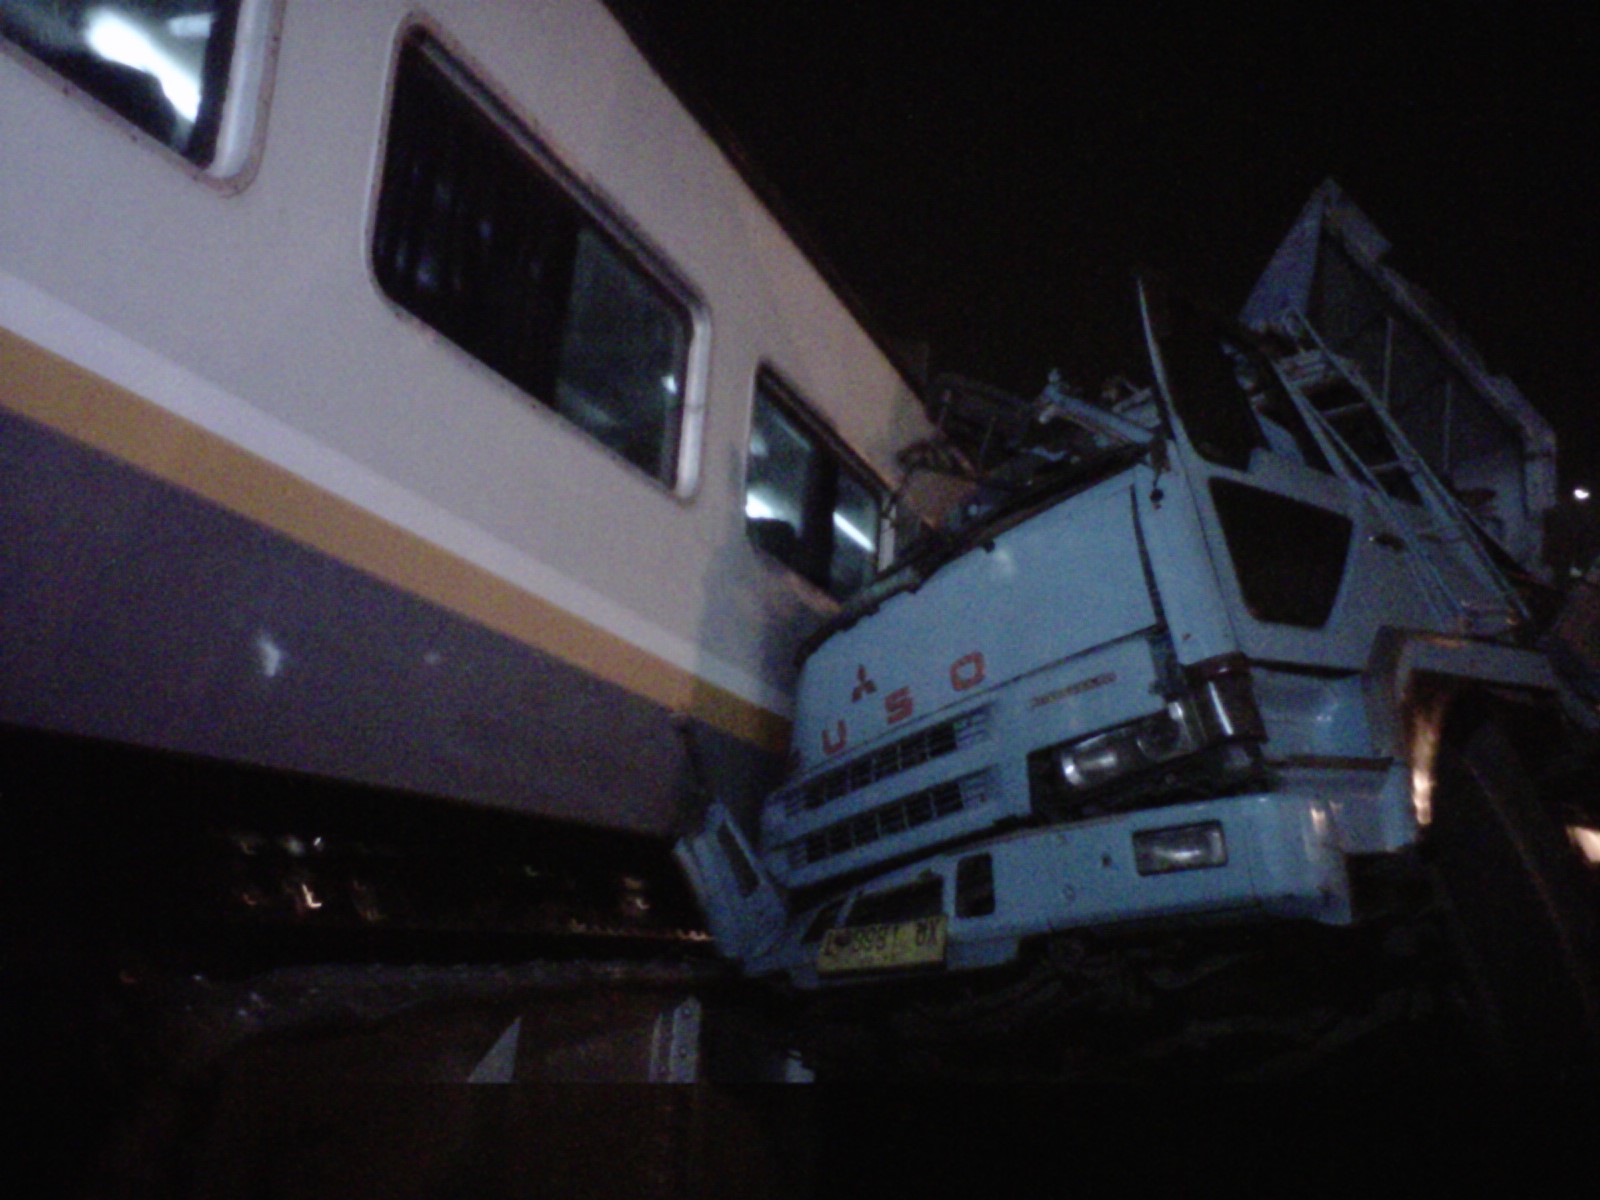 INilah kondisi truk trailer yang mengalami kecelakaan di palang pintu perlintasan kereta api Doloq. 